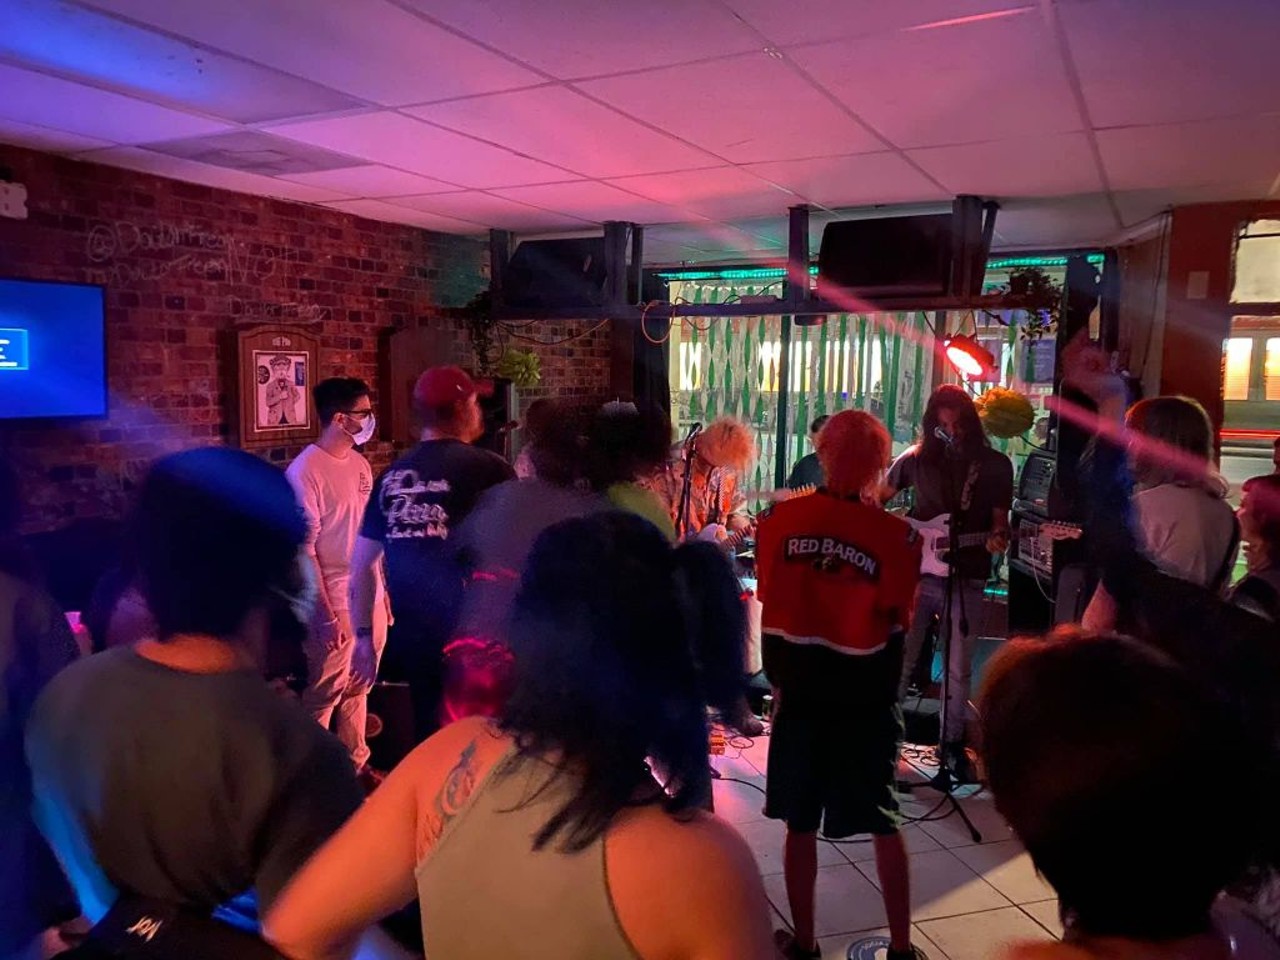 Grumpy&#146;s Underground Lounge 
1018 N Mills Ave, Orlando, FL 32804, (813) 898-4717
Grumpy&#146;s has live music, a fun atmosphere and good food.
Photo via Grumpy&#146;s Underground Lounge/Facebook